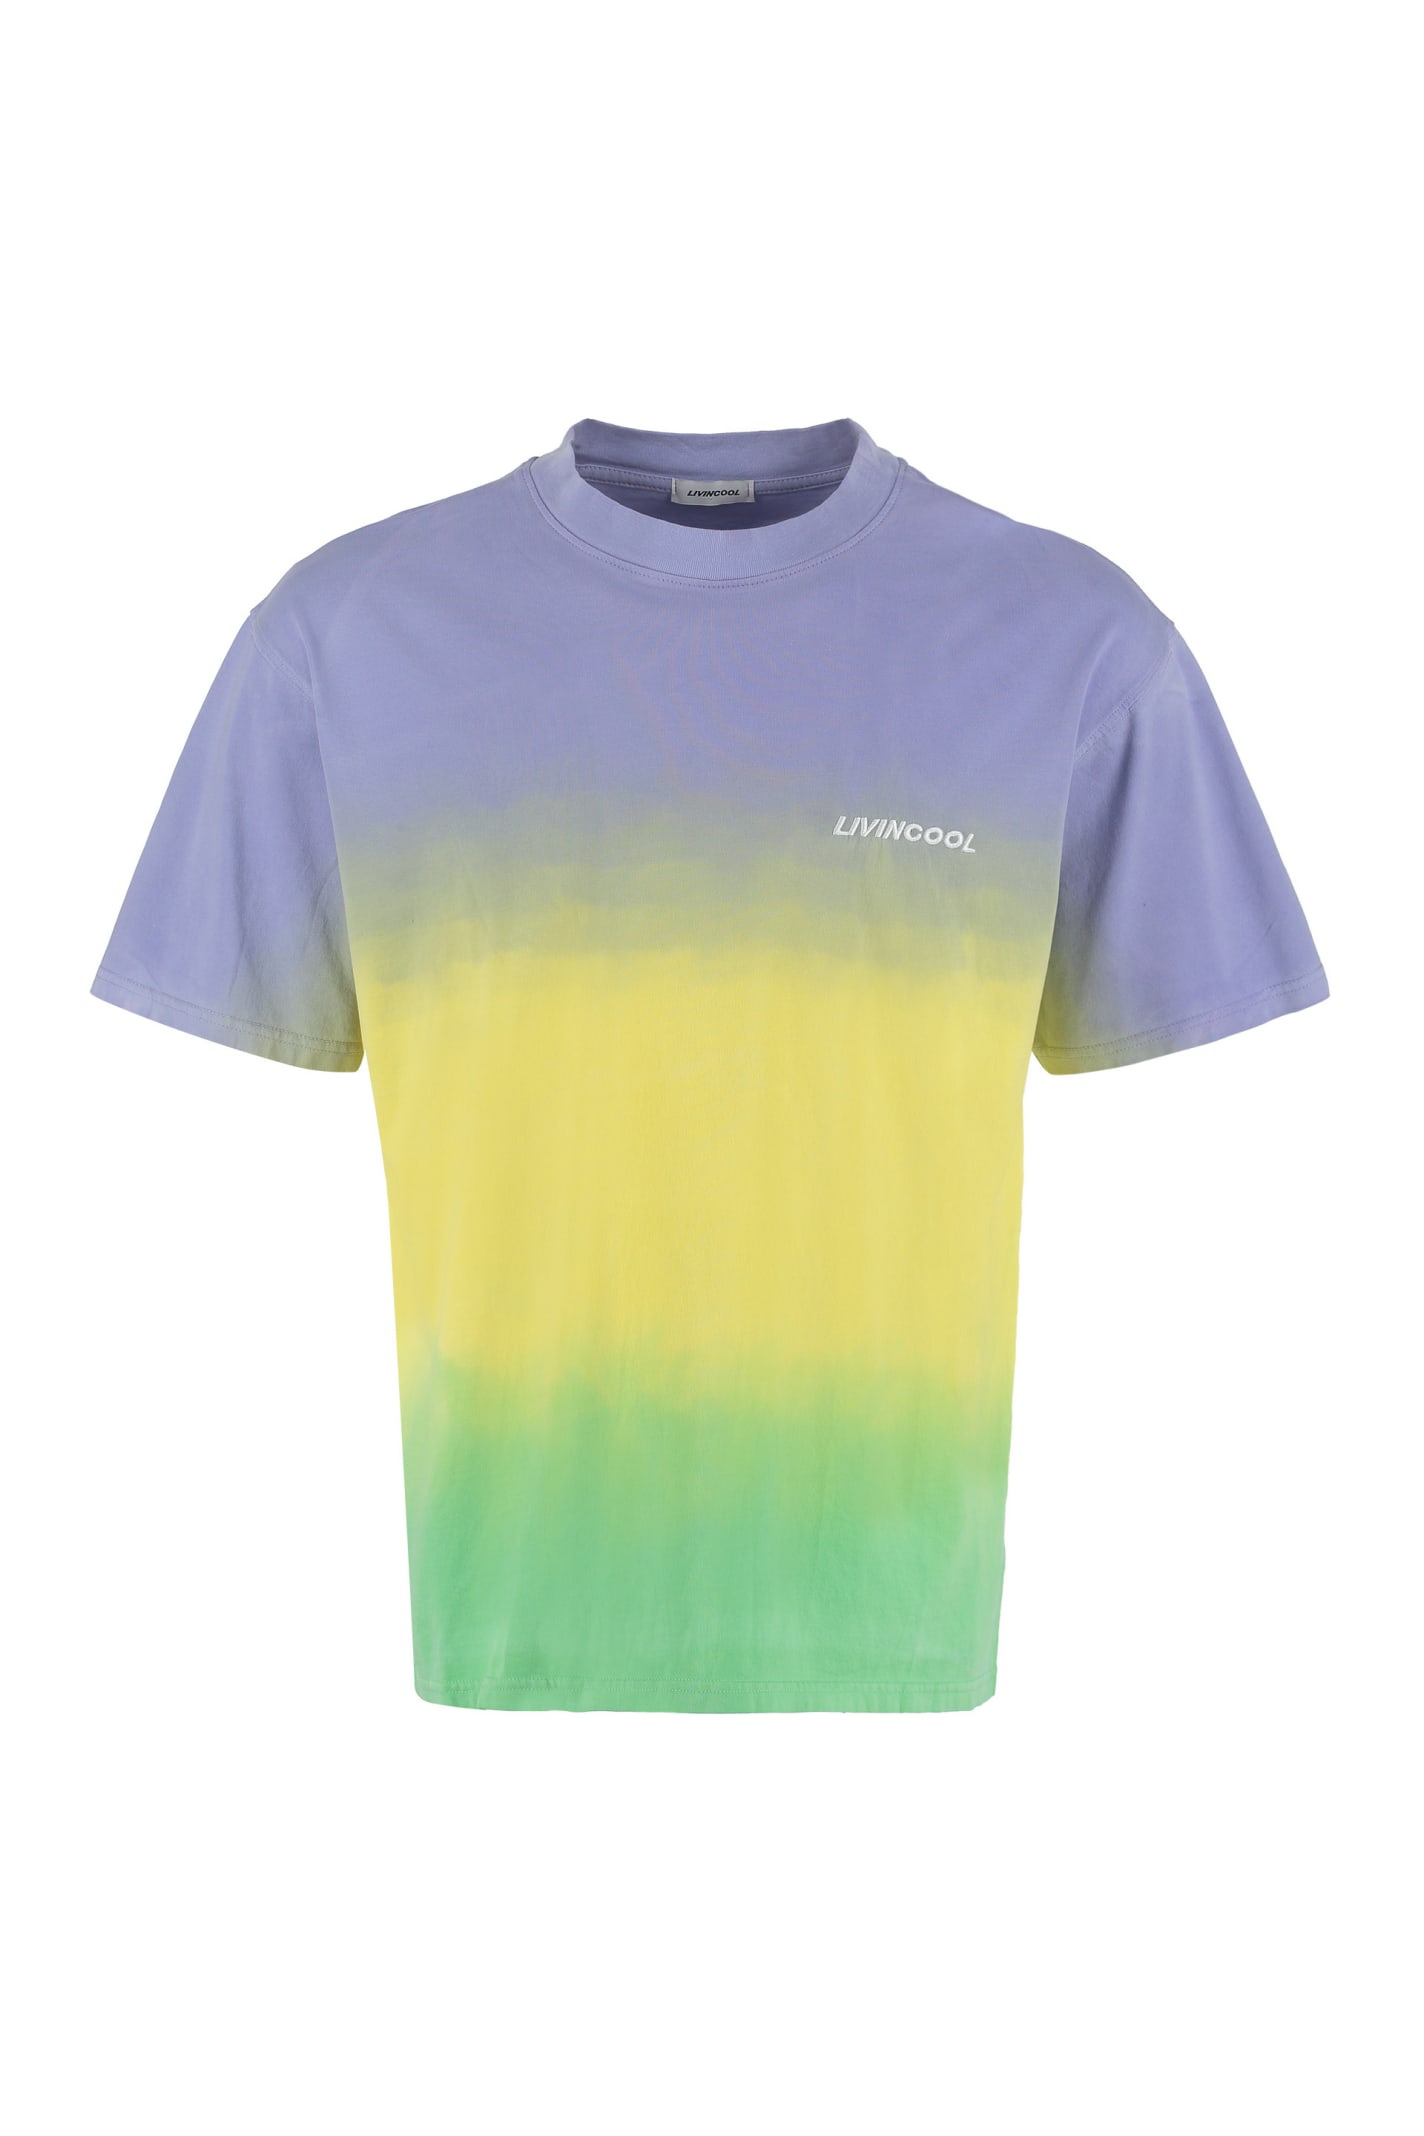 Livincool Tie-dye Cotton T-shirt In Multicolor